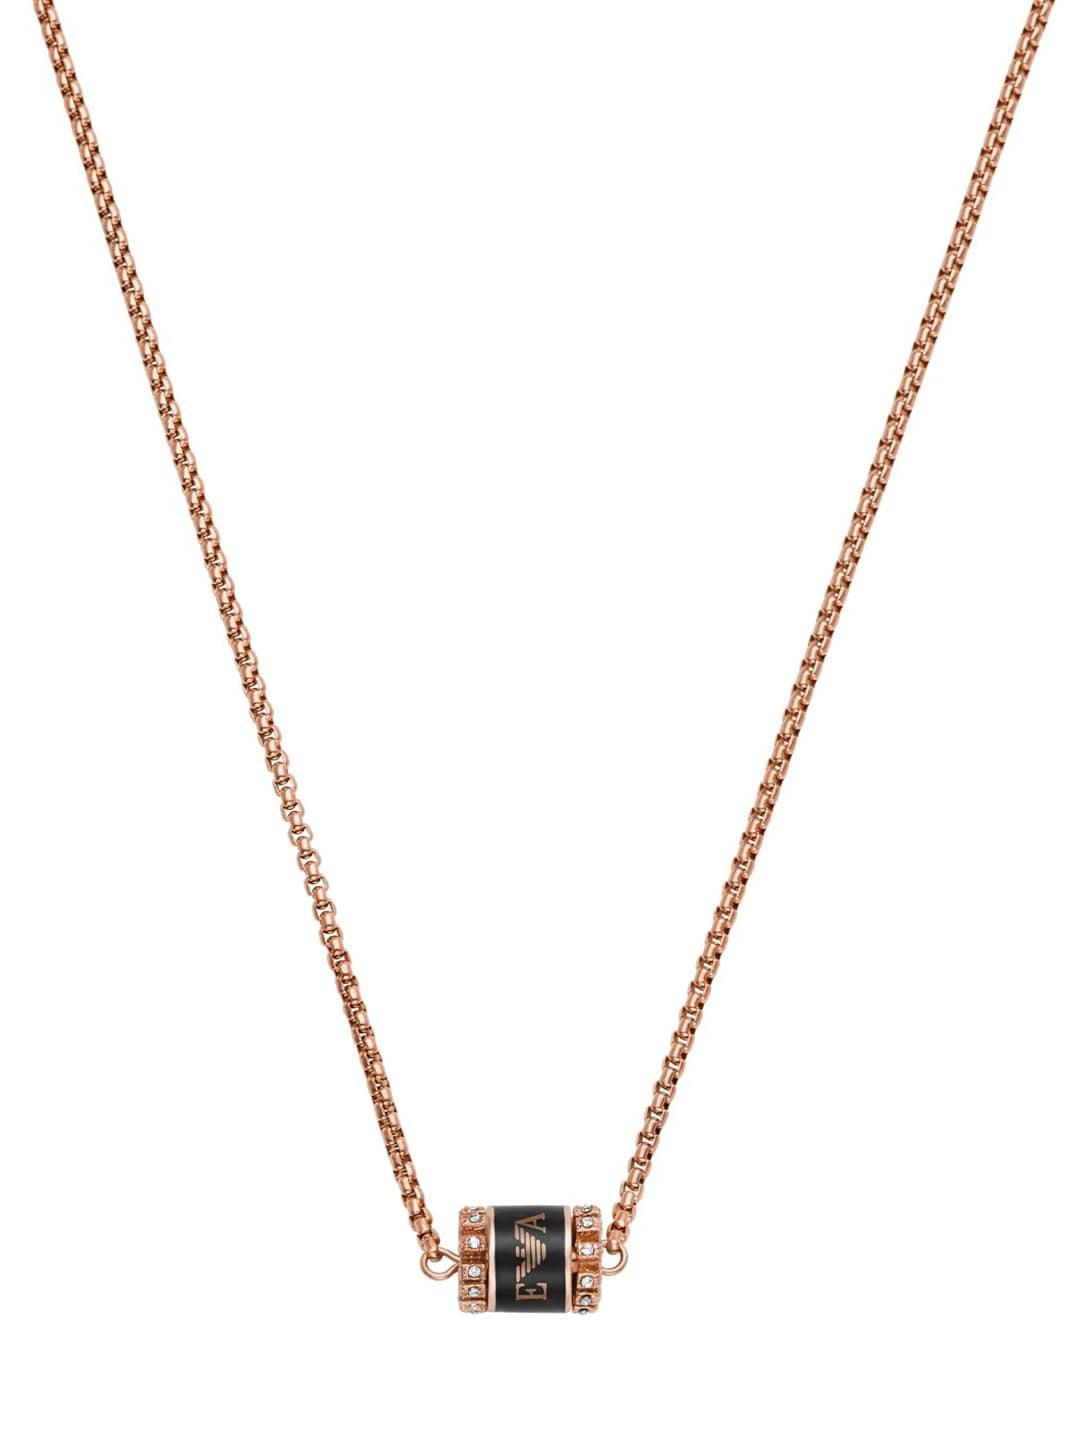 Emporio Armani Rose Gold & Black Rhodium-Plated Necklace